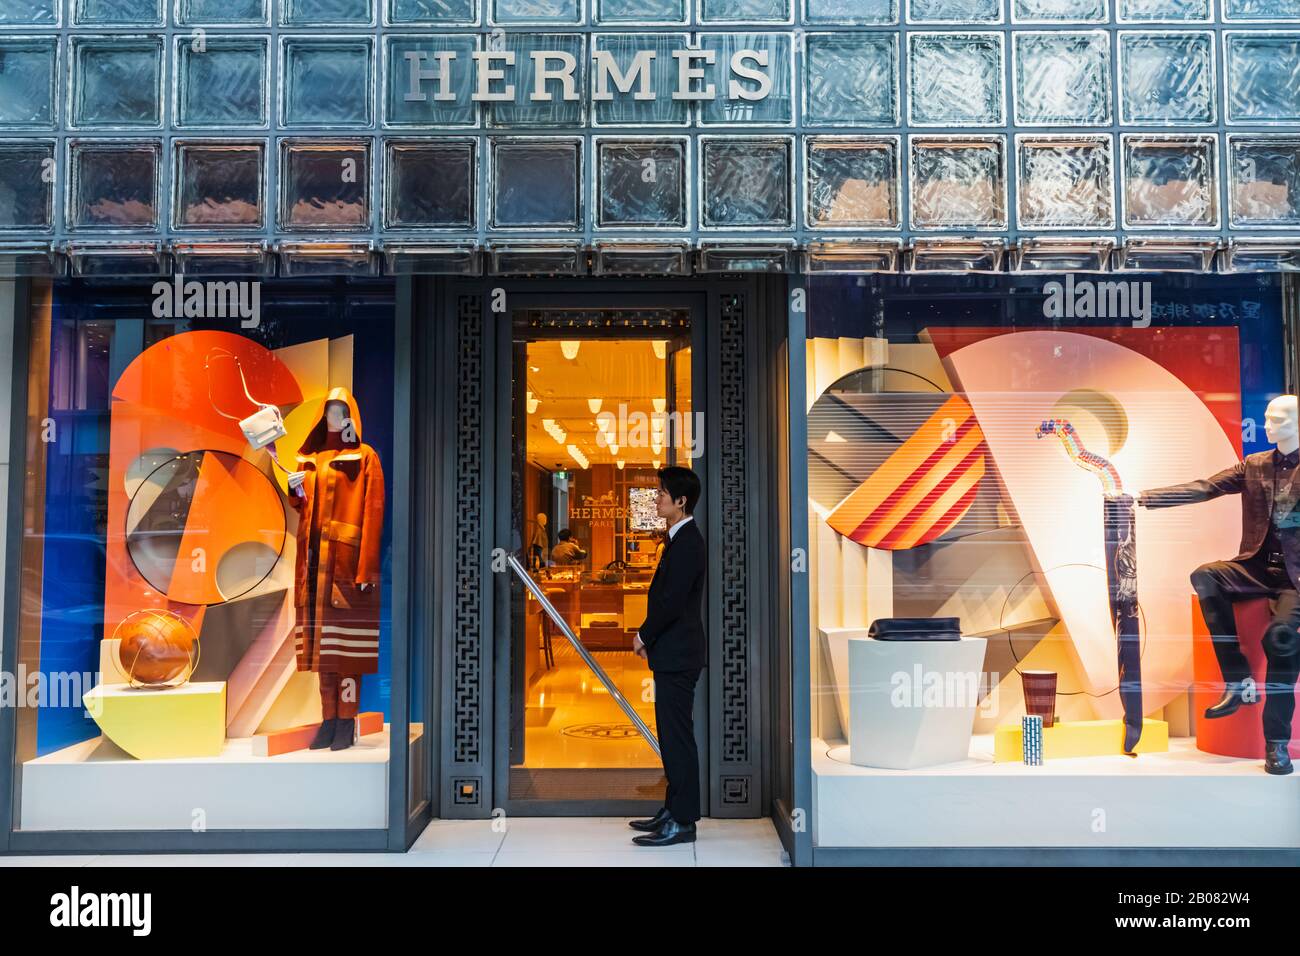 Japan, Honshu, Tokyo, Ginza, Hermes Store Window Display and